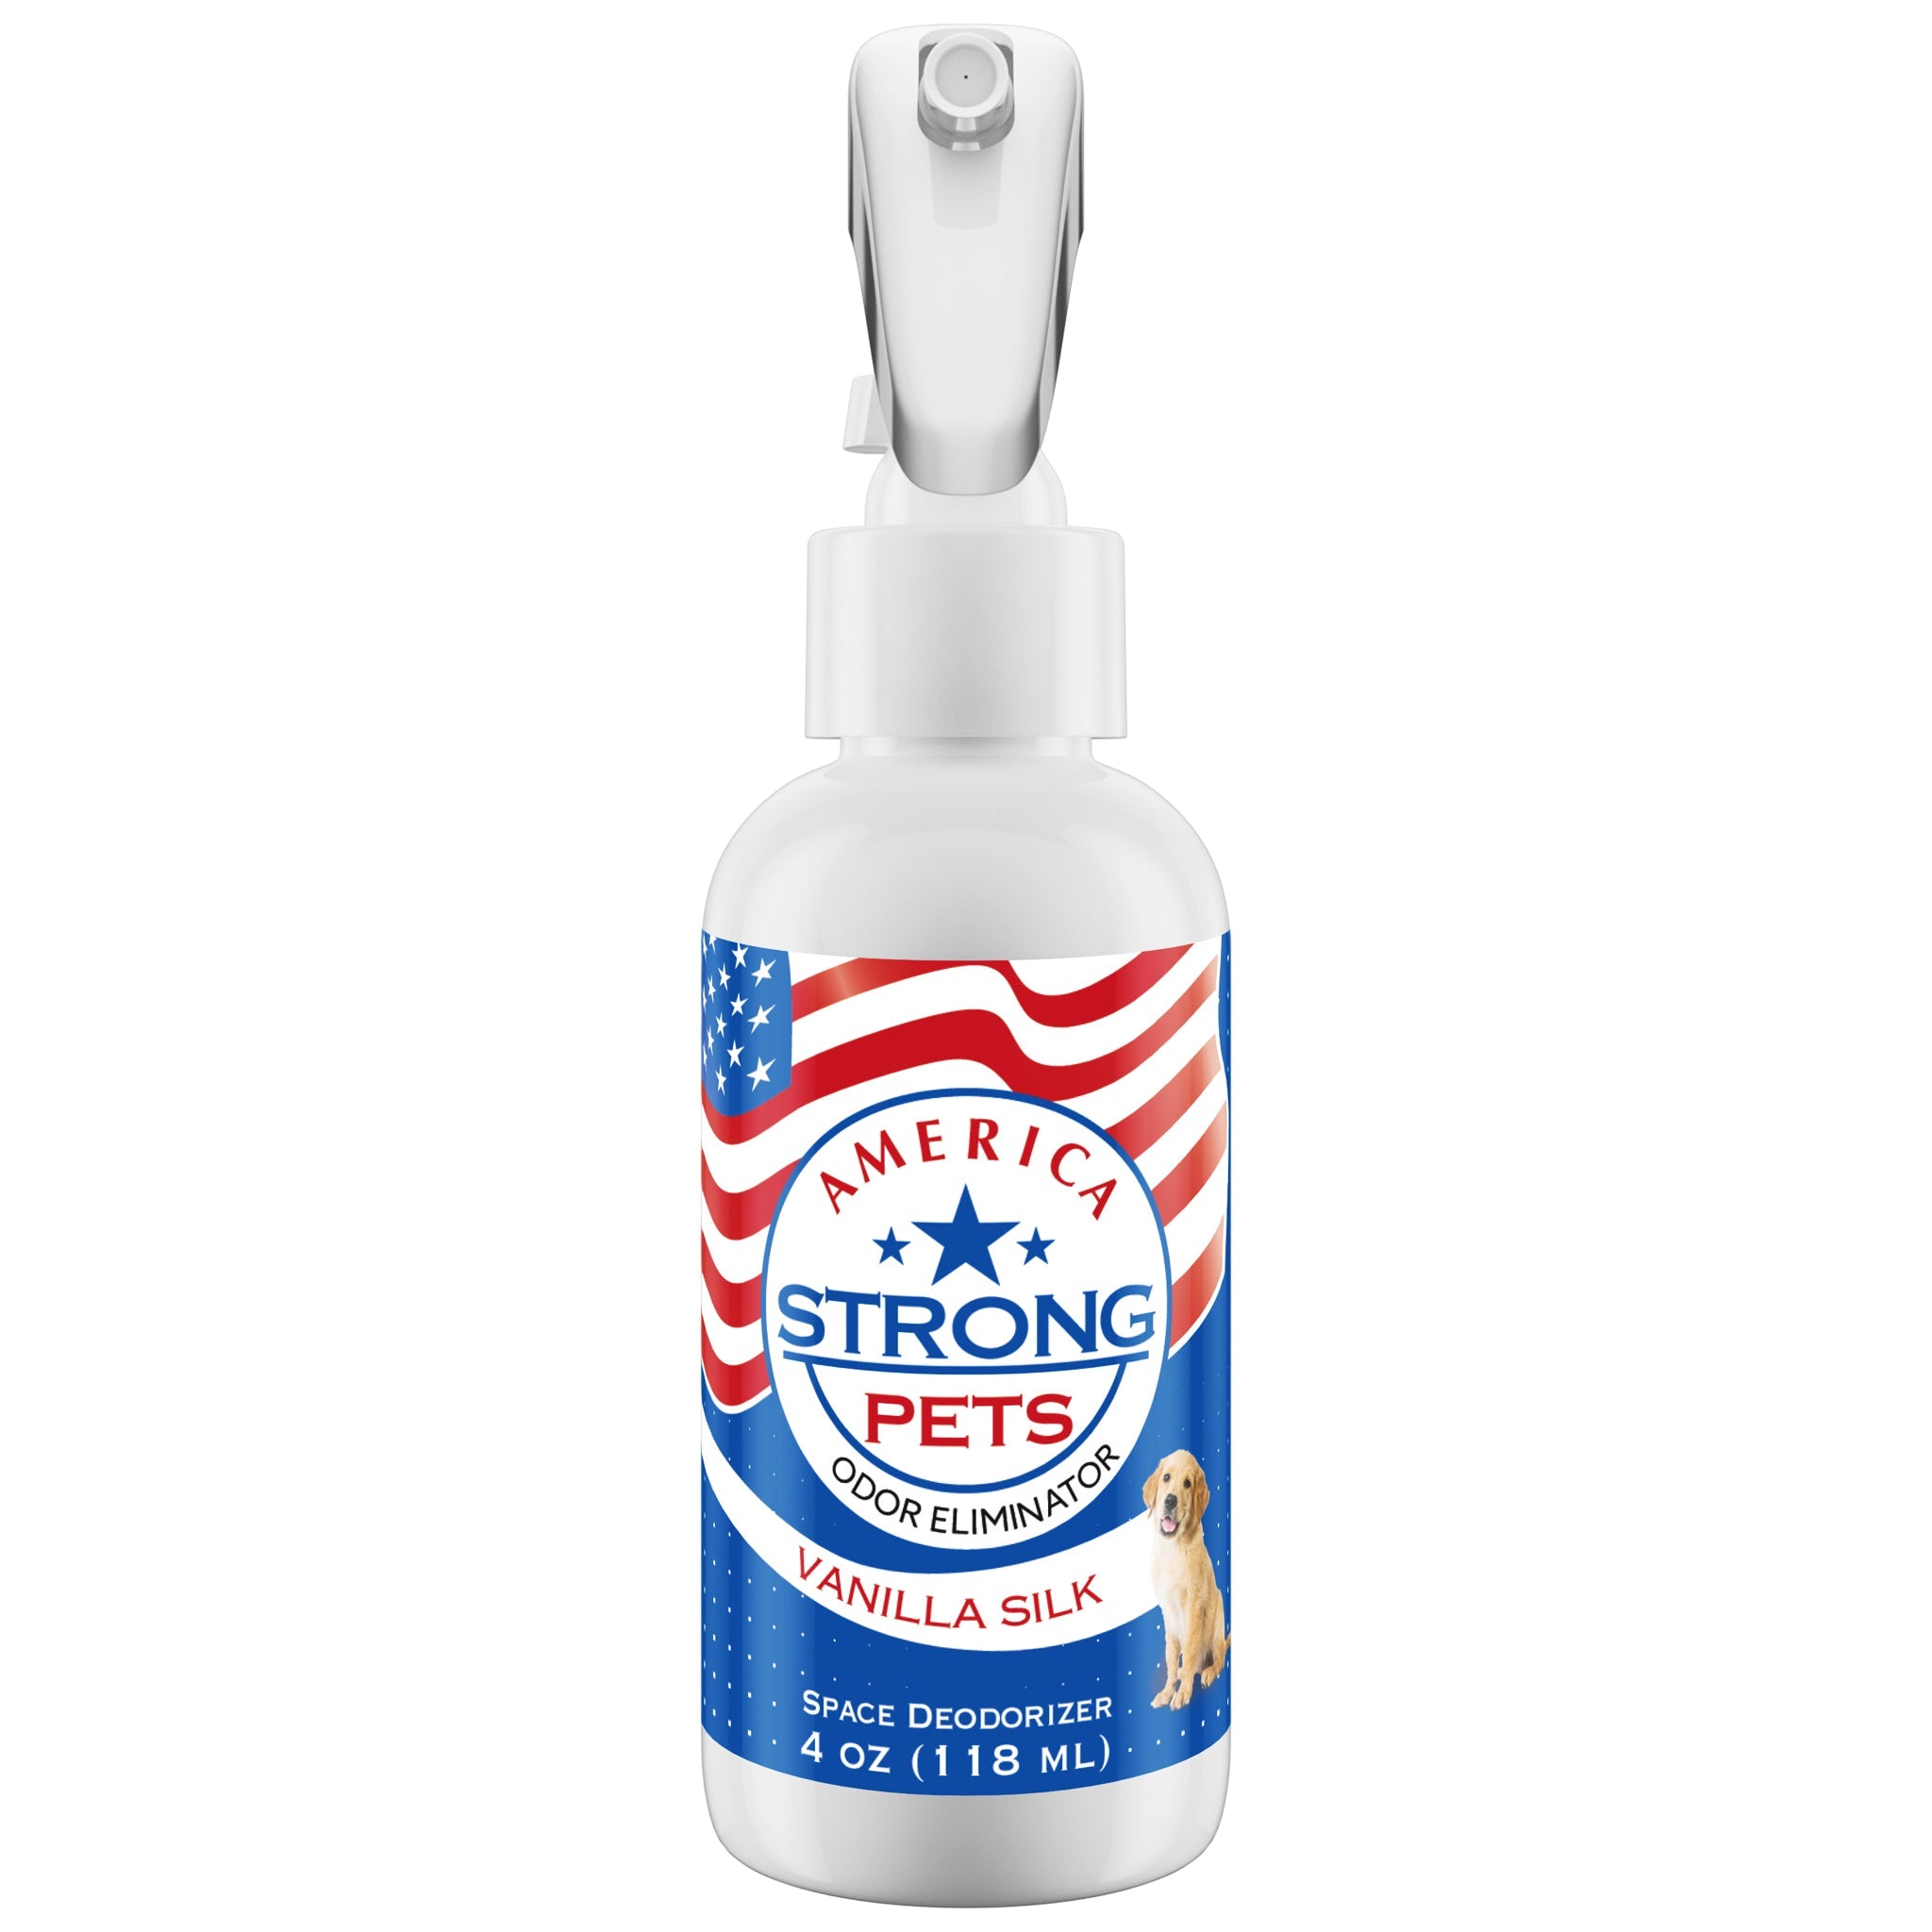 America Strong Pet Odor Eliminator - Vanilla Silk Scent Size: 4 fl oz